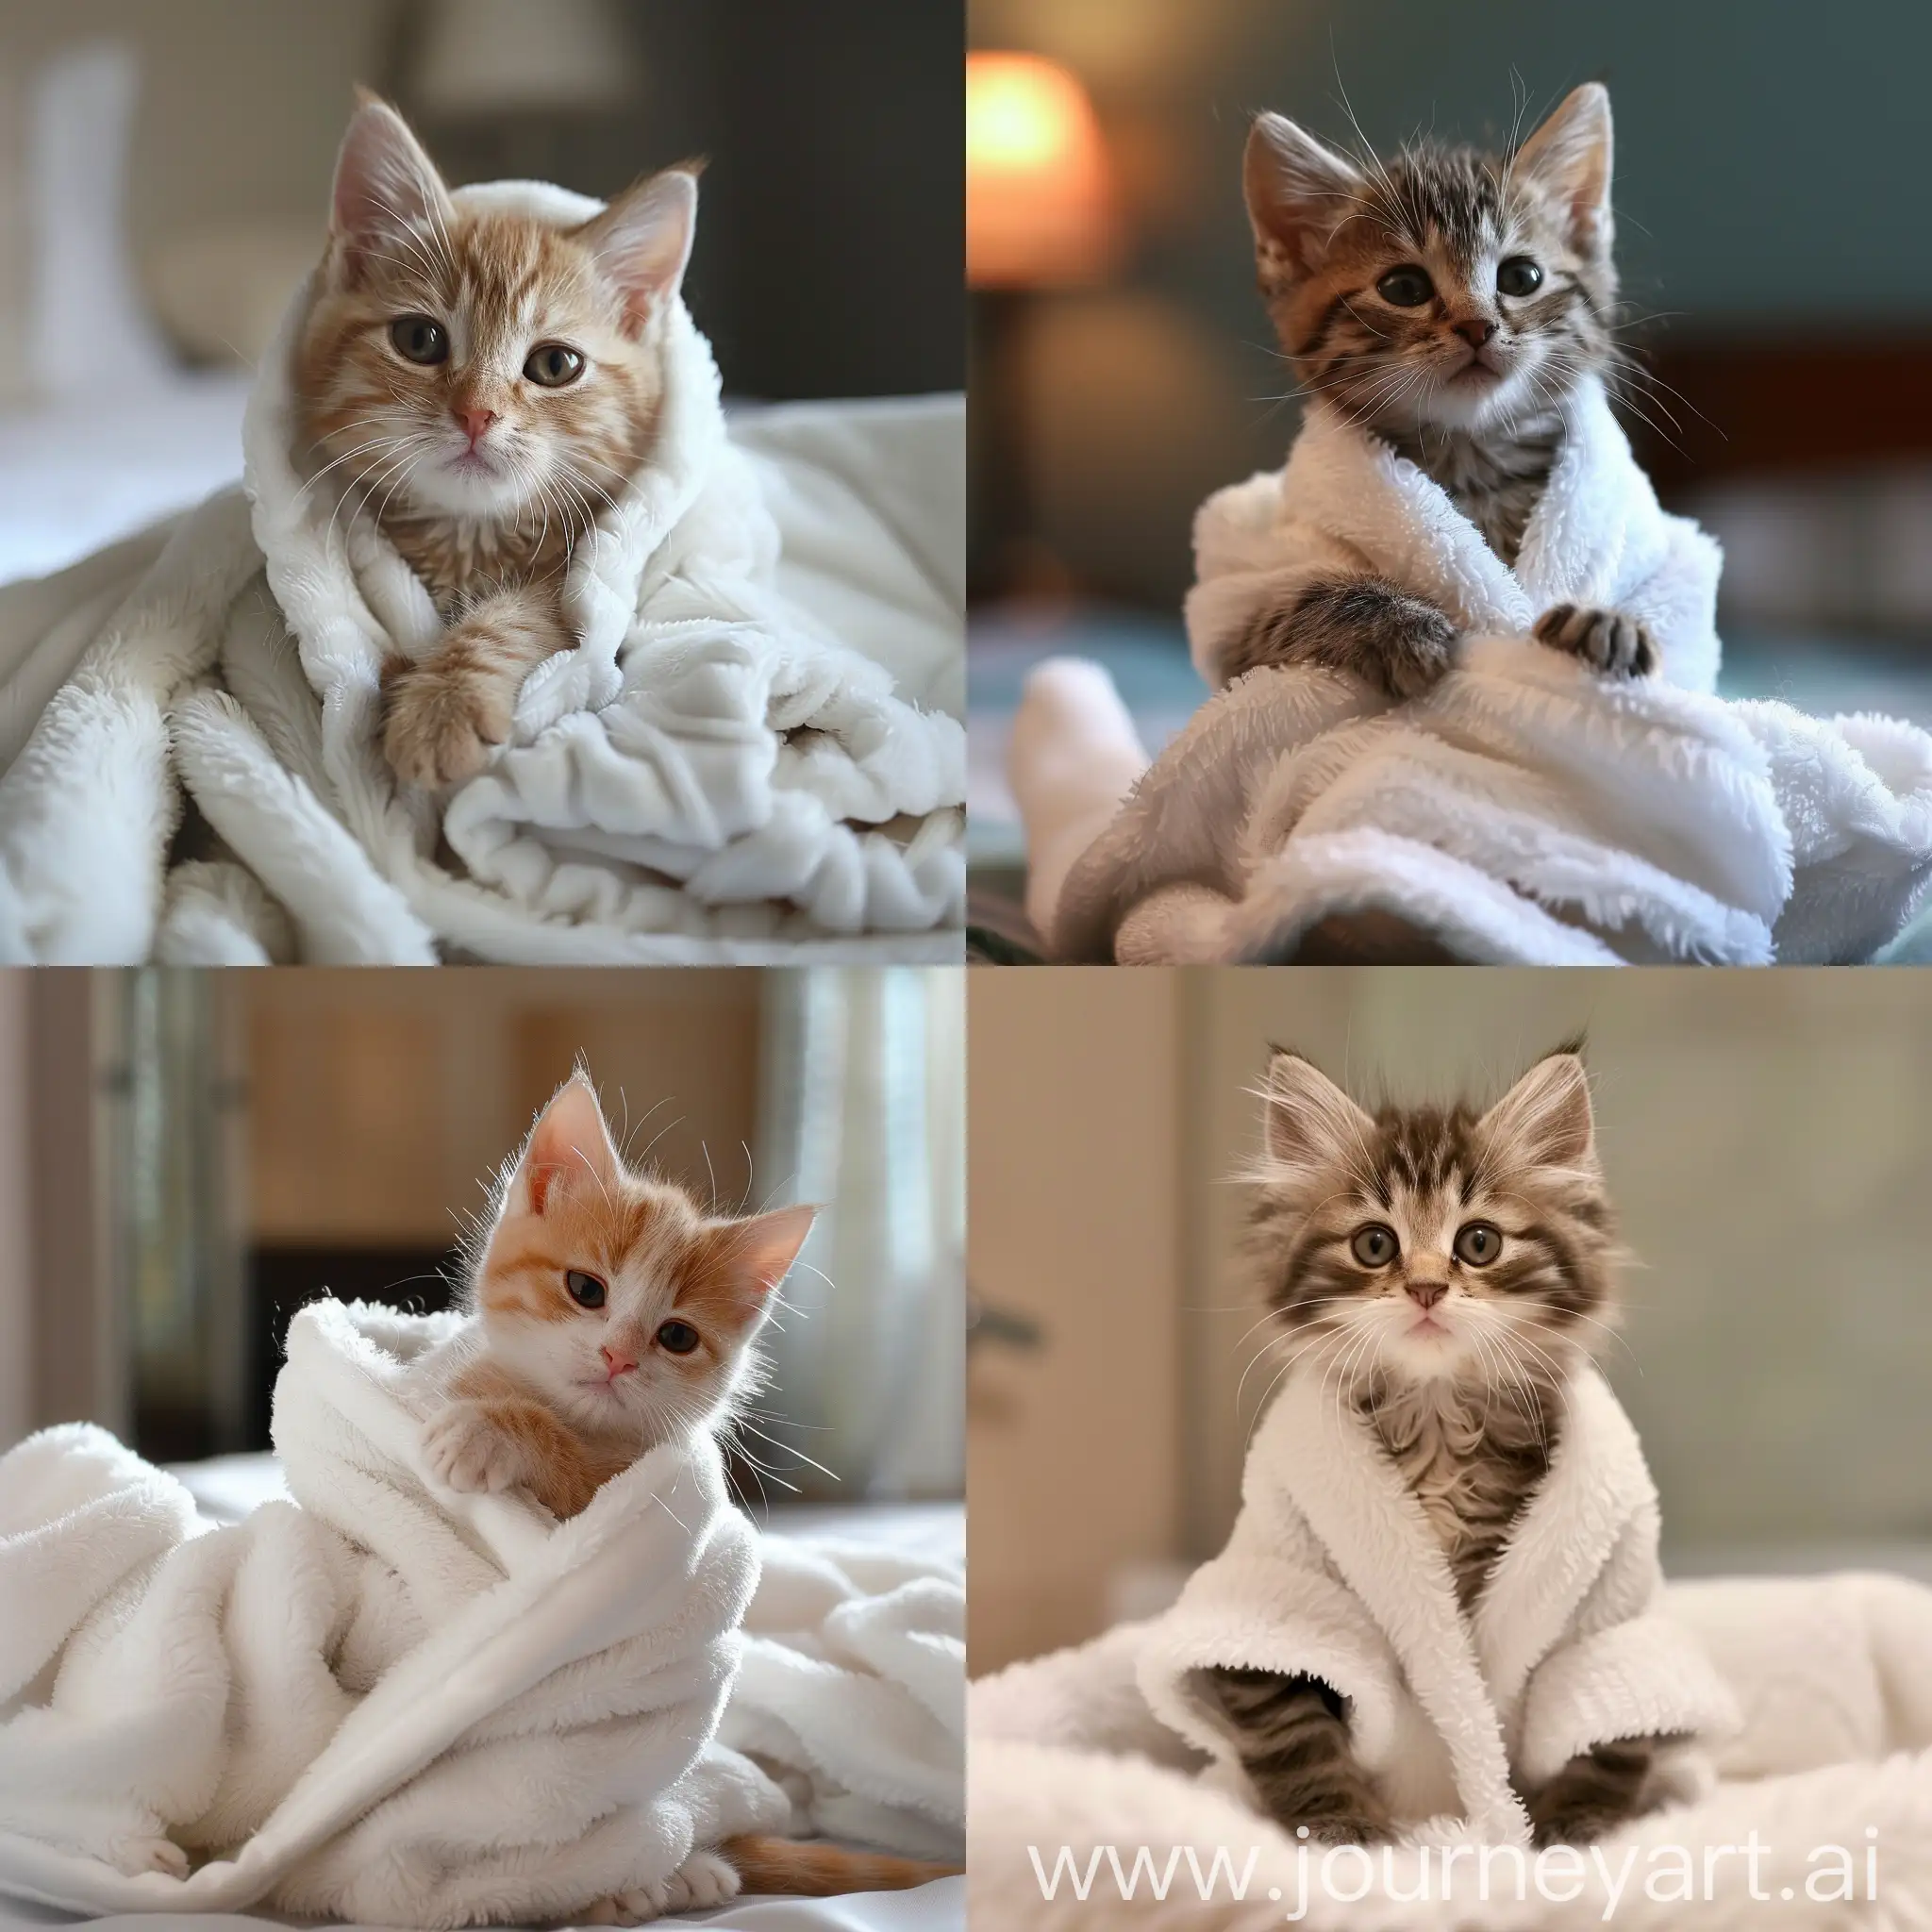 Adorable-Kitten-in-a-White-Robe